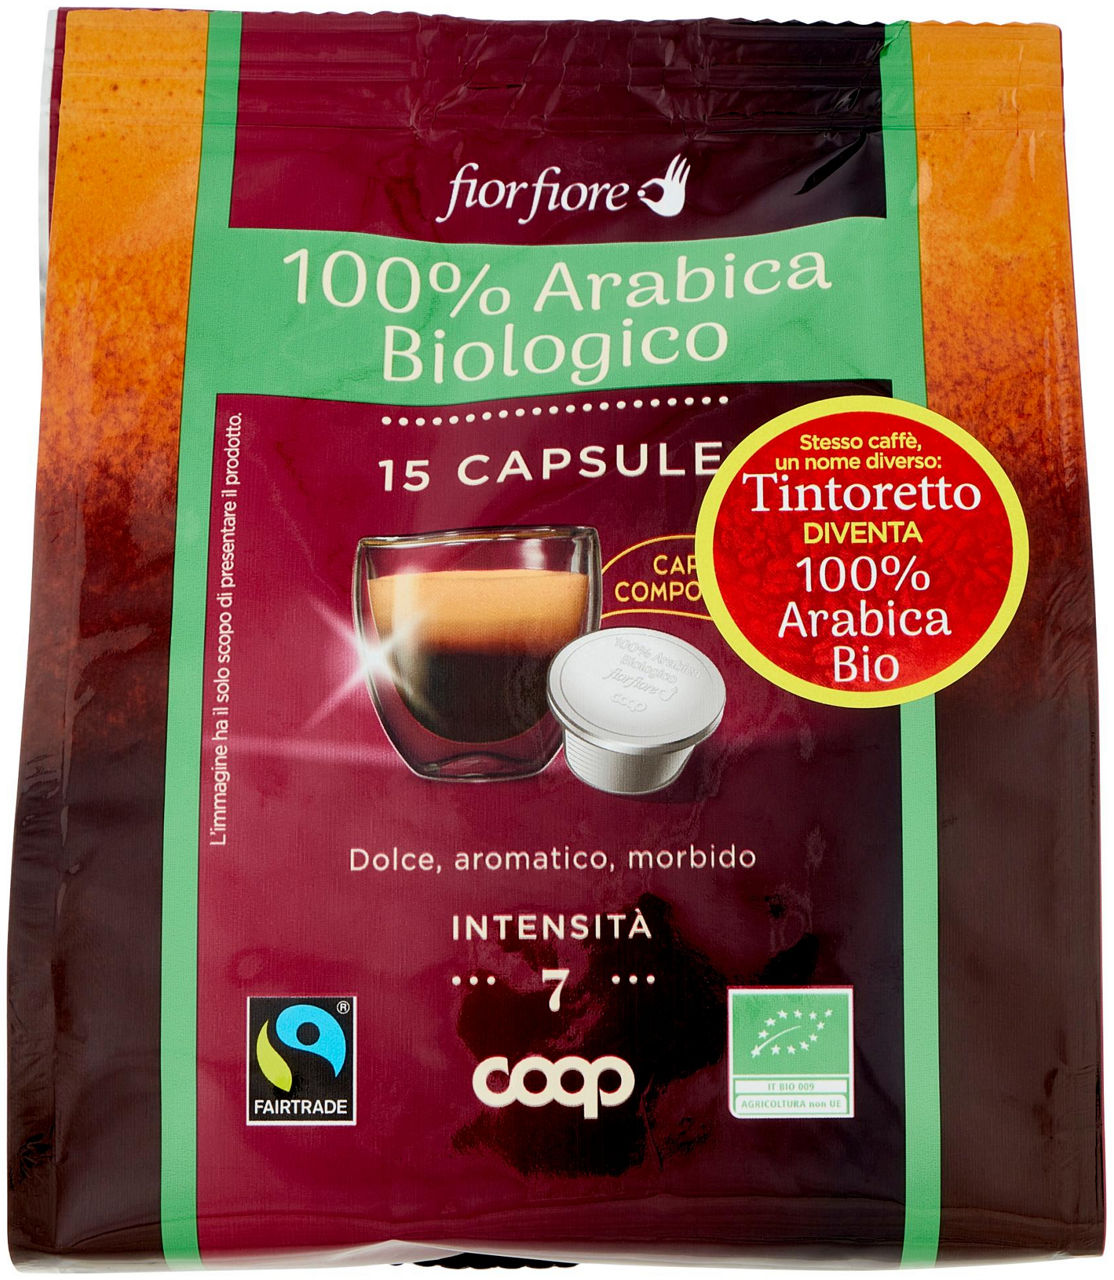 Caffe' bio solidal in capsule compostabili tintoretto ff coop sac pz 15 g 95